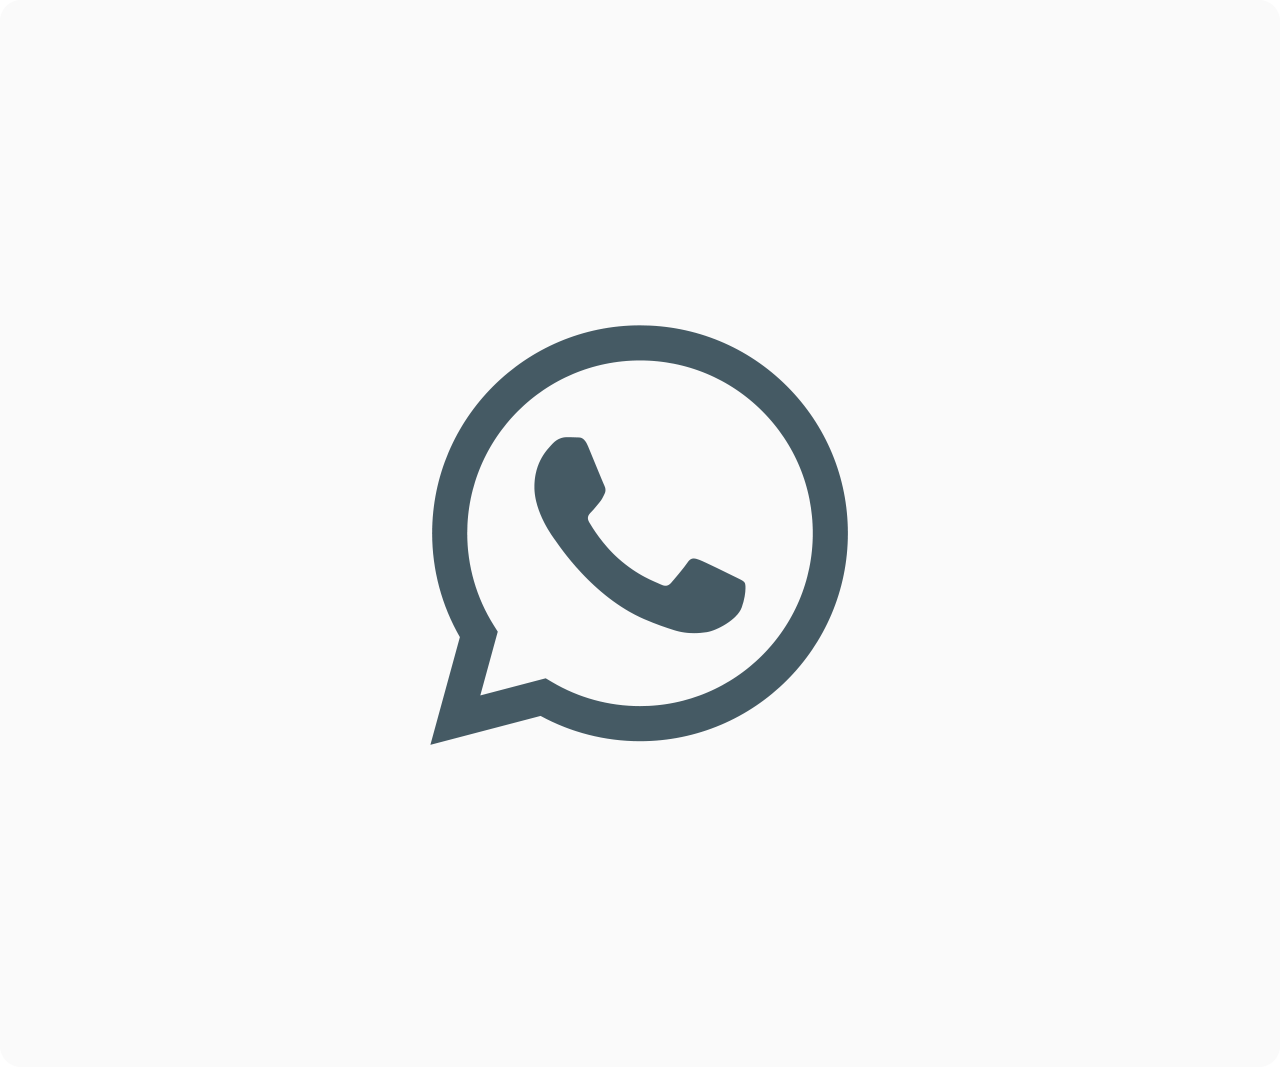 Single Social Media Company Logo - WhatsApp Brand Resources